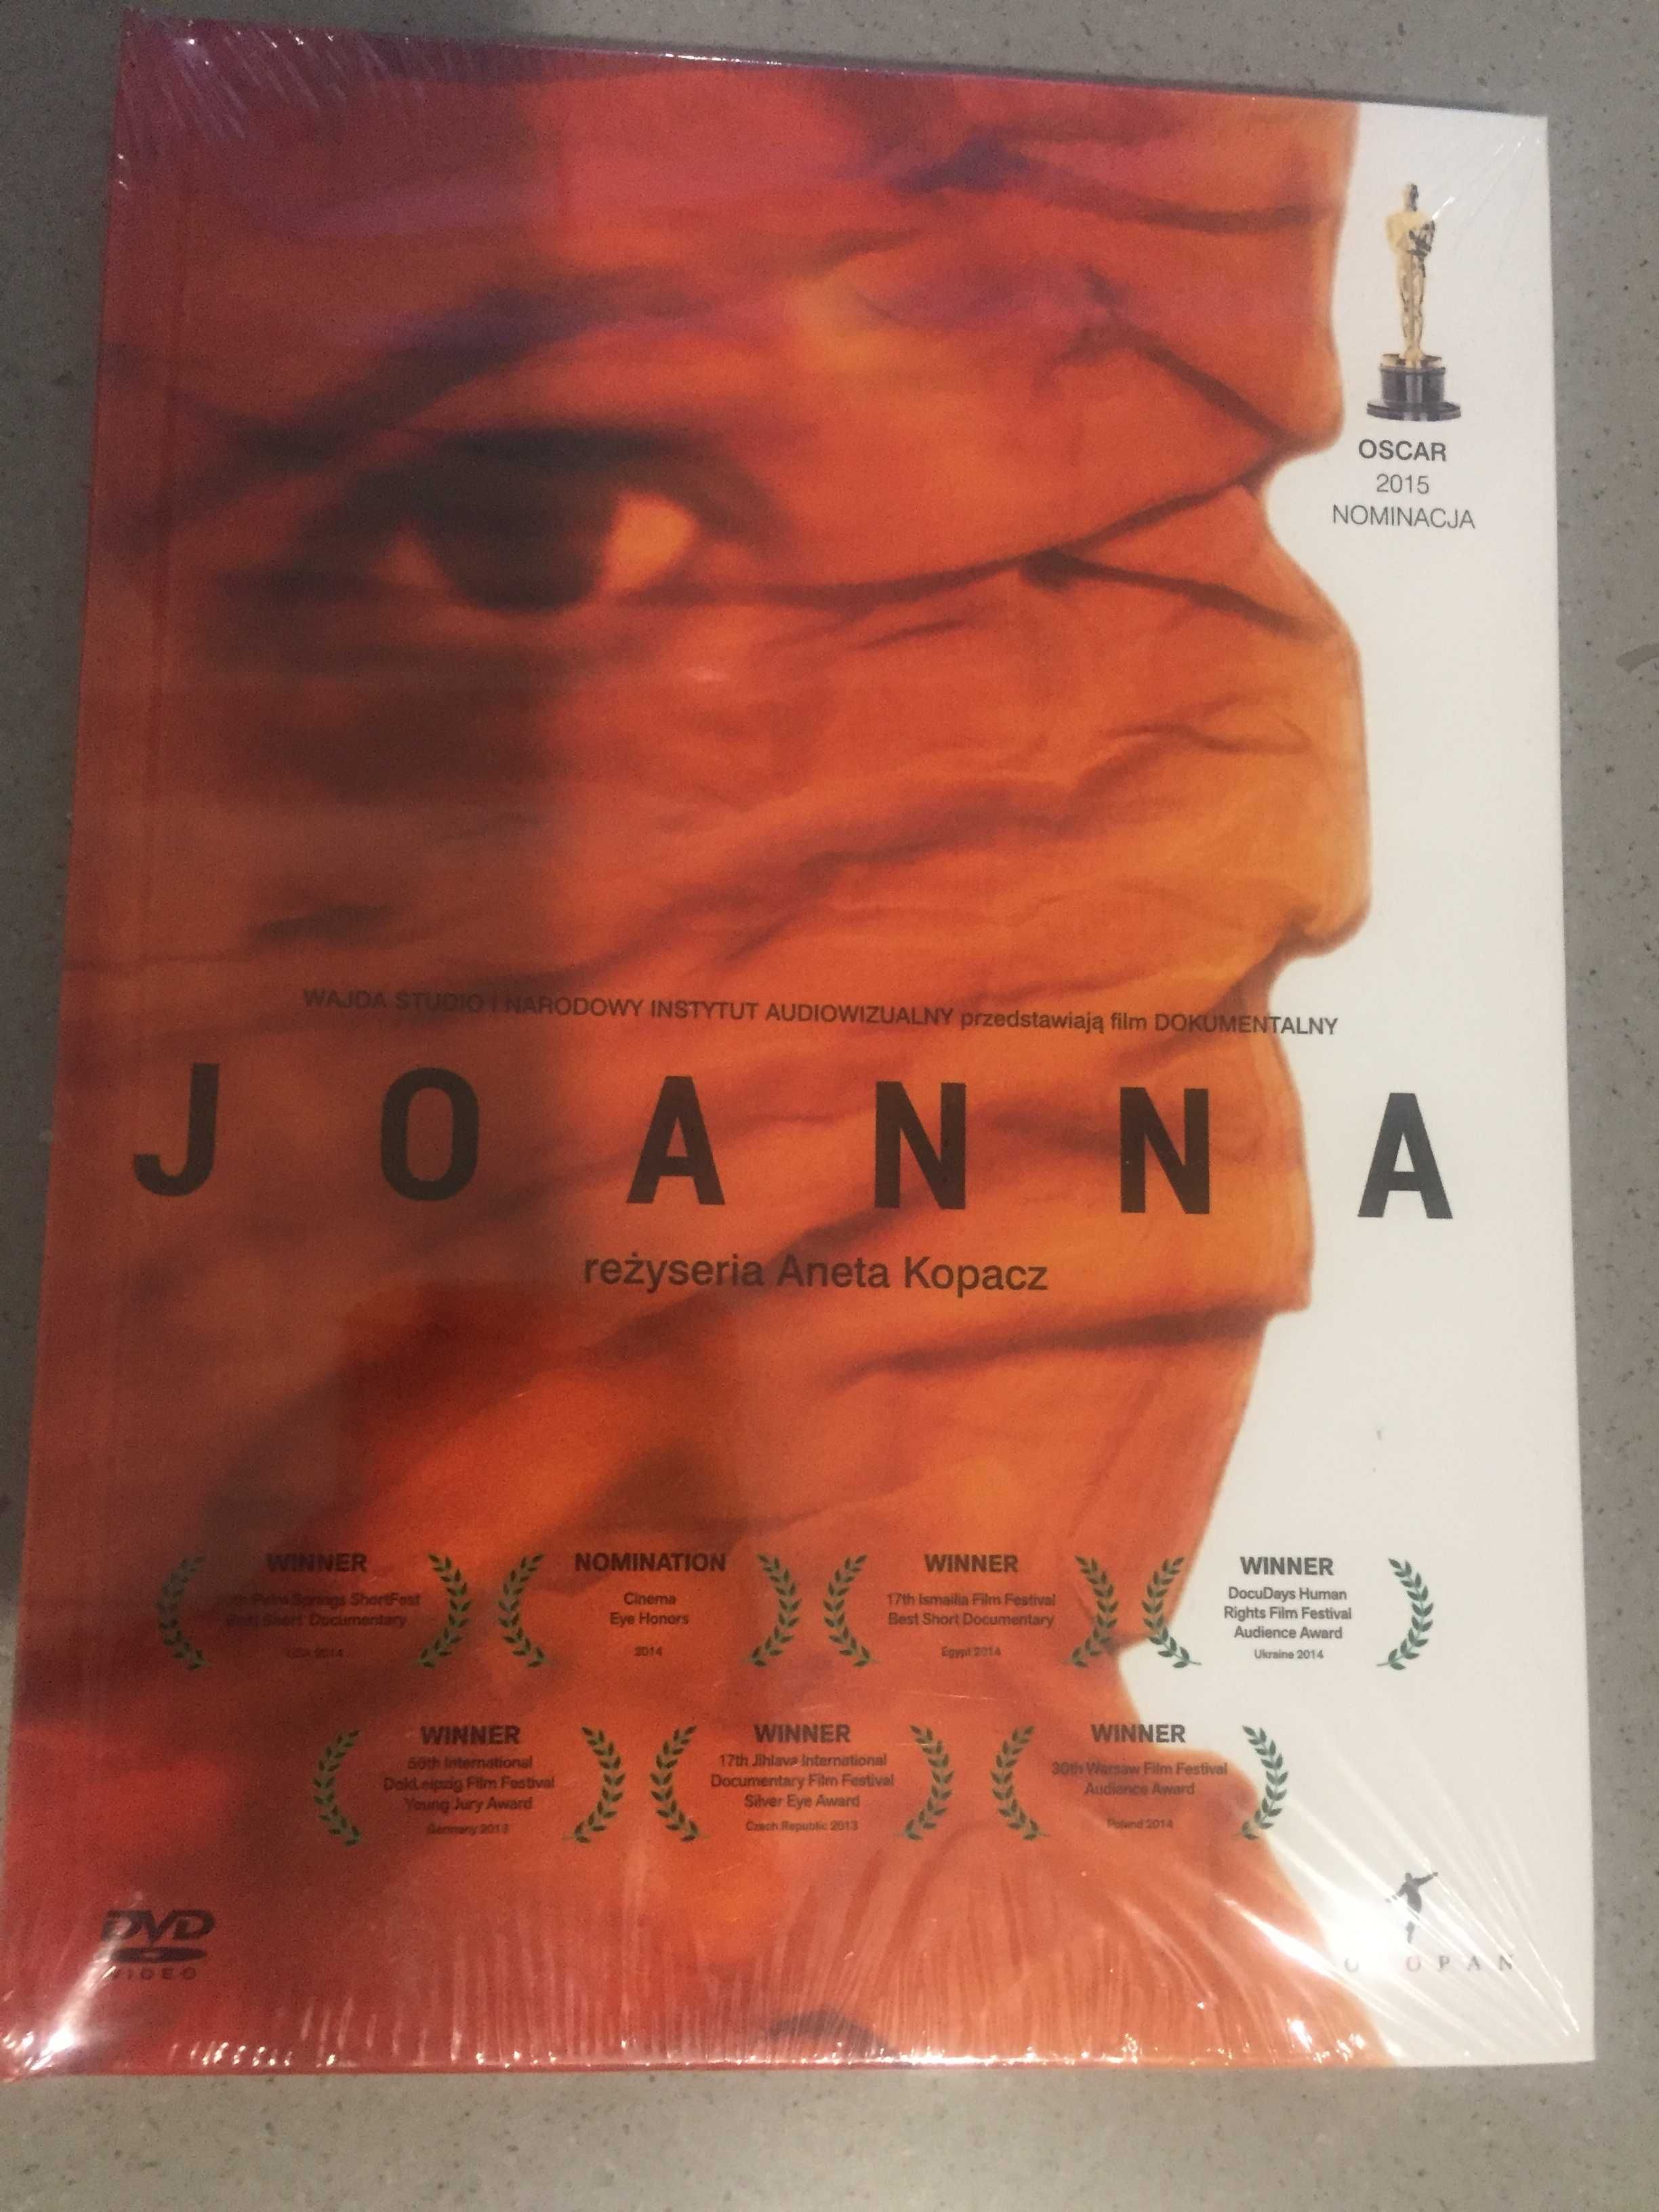 Film "Joanna", dvd